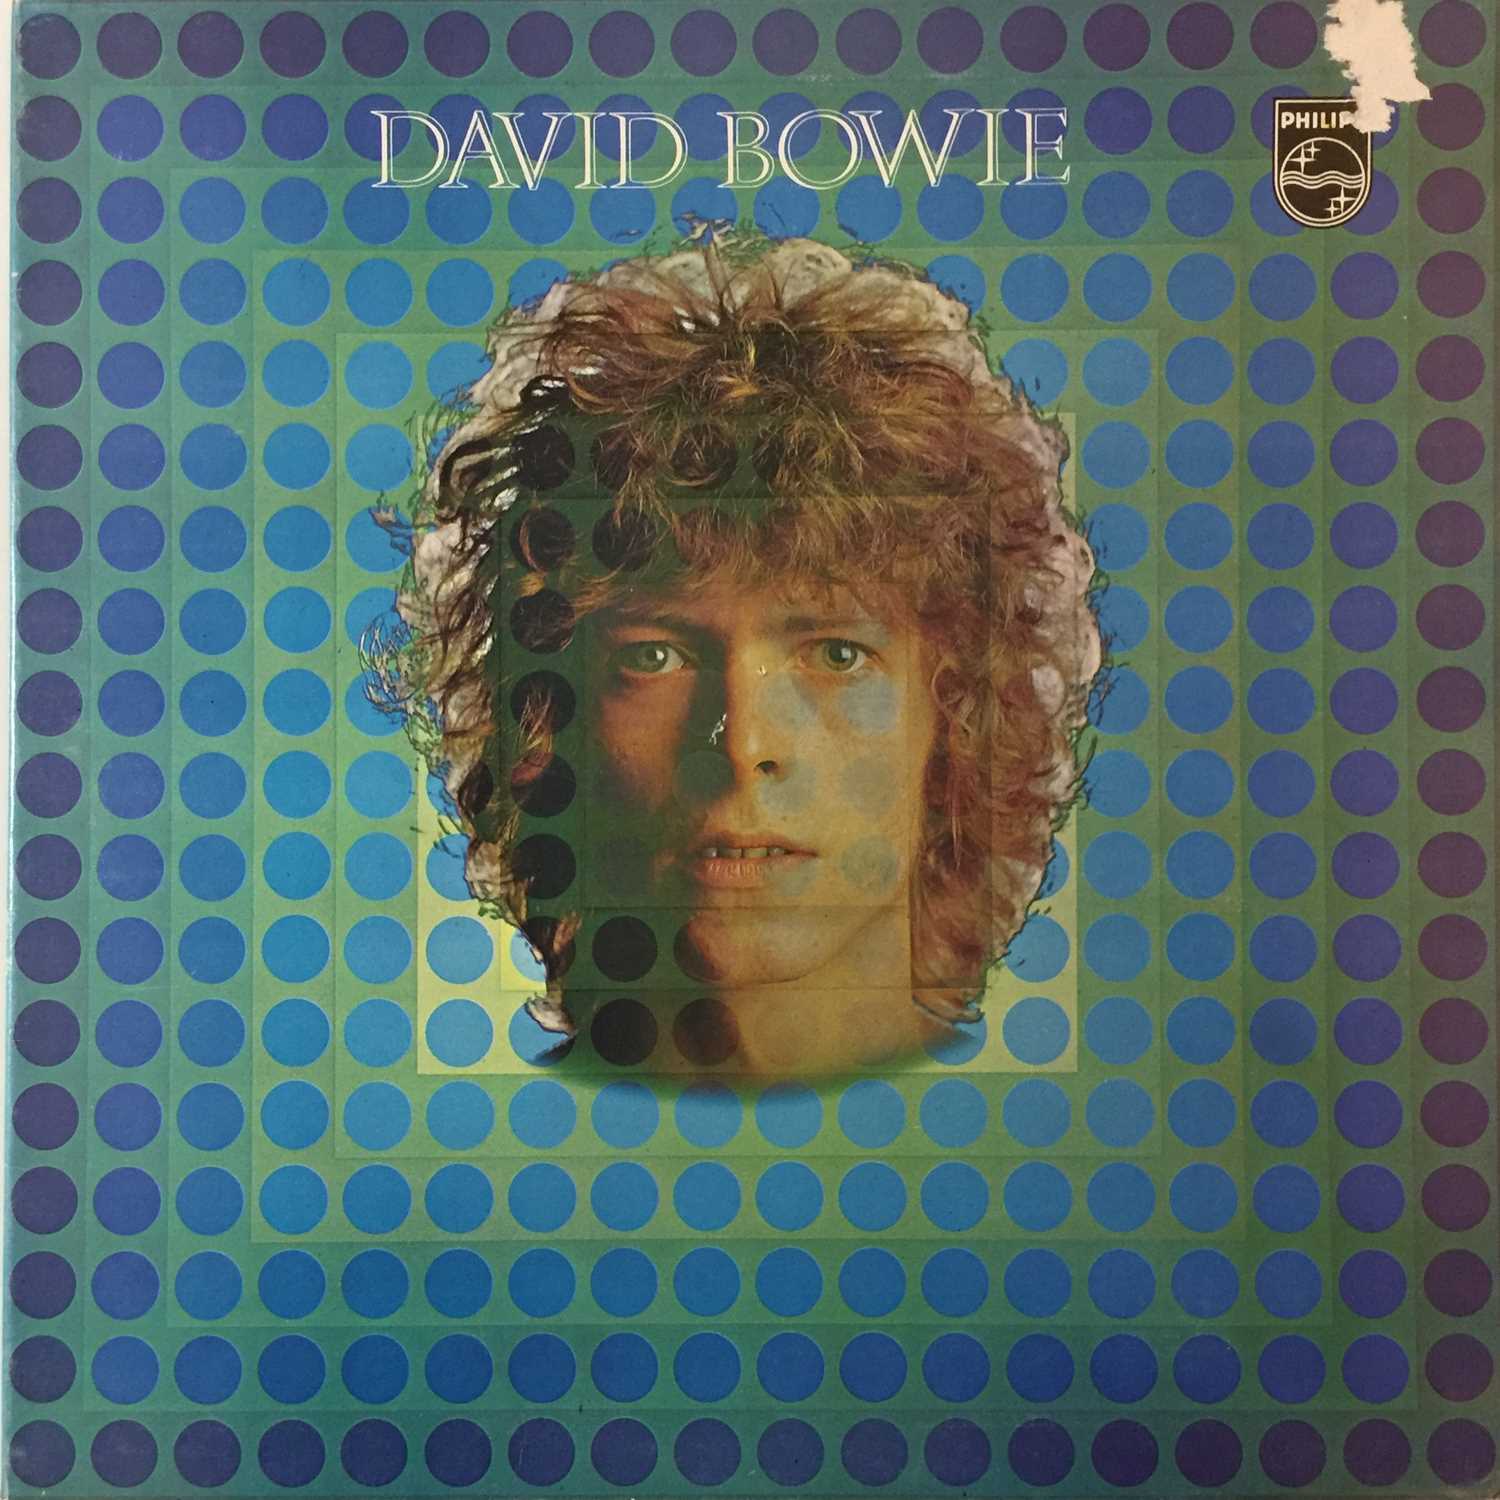 Lot 3 - DAVID BOWIE - S/T (SPACE ODDITY) - DUTCH ORIGINAL LP (SBL 7912)